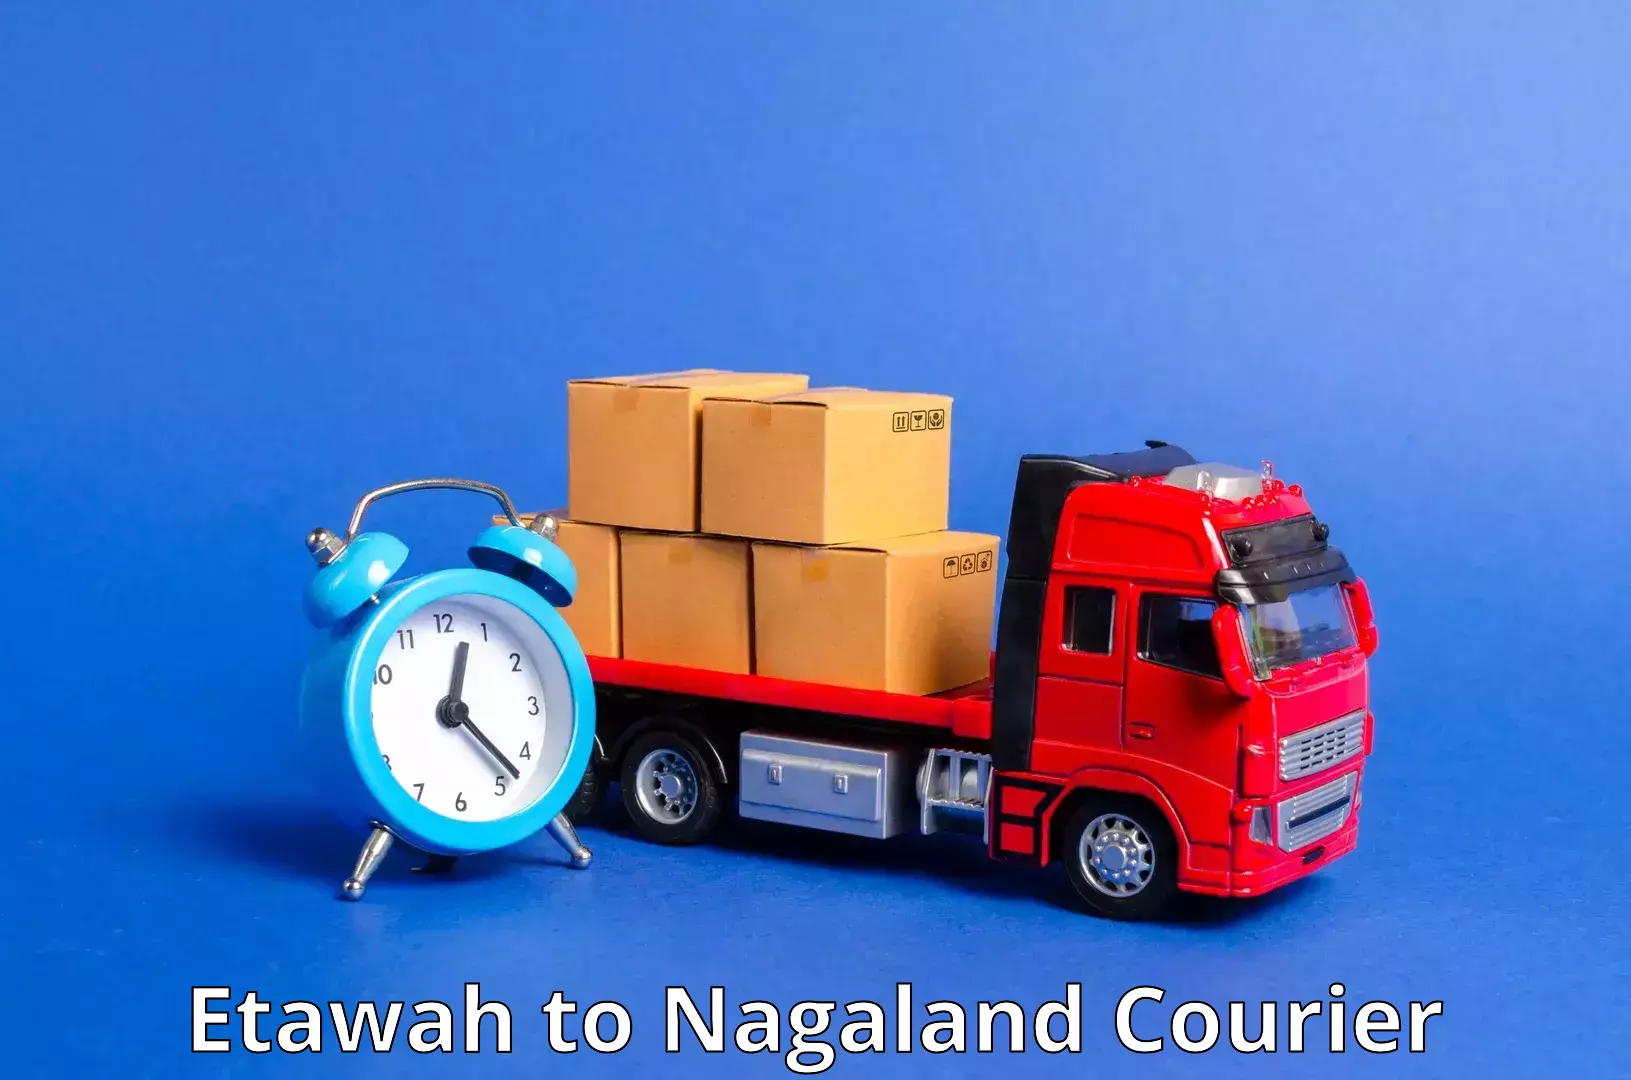 Global courier networks Etawah to Dimapur